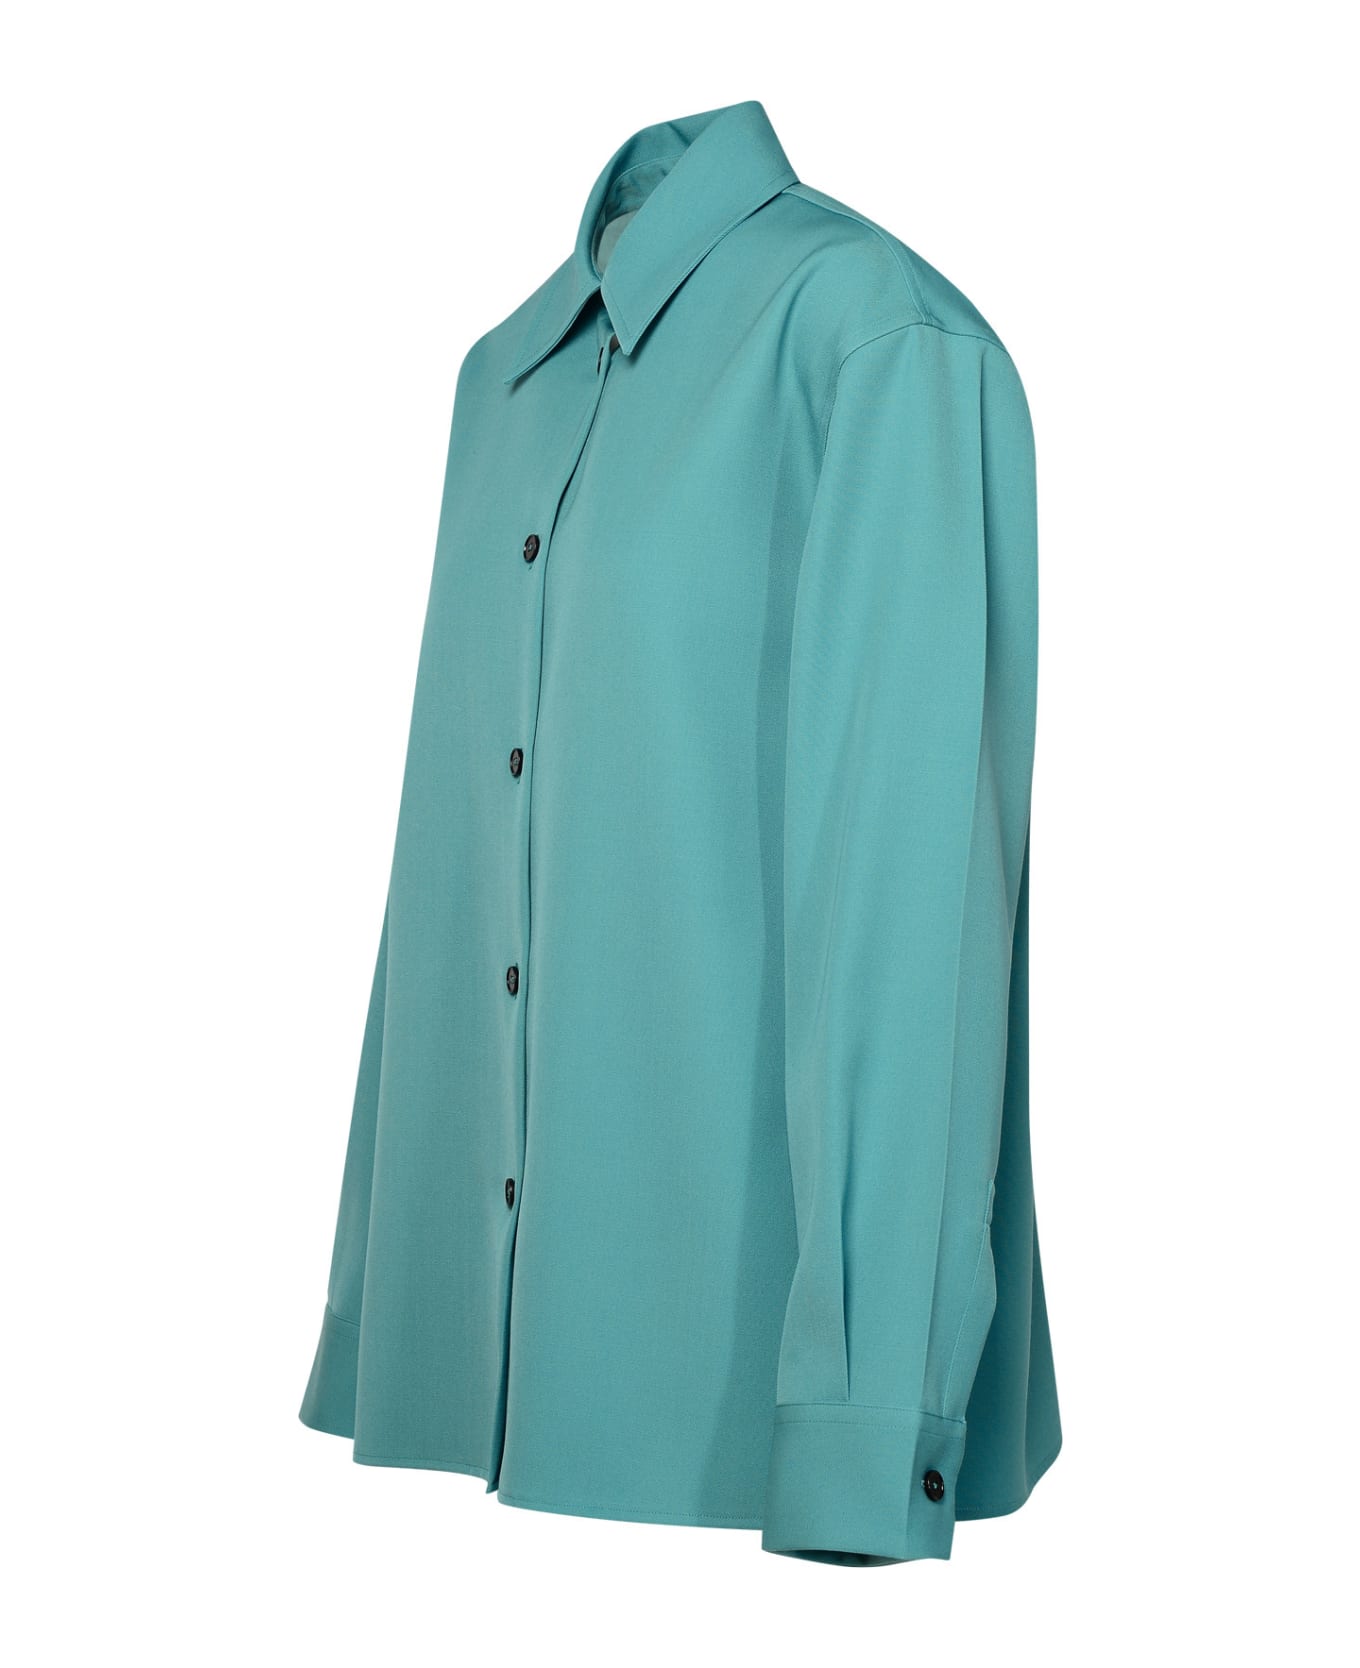 Jil Sander Turquoise Wool Shirt - Light Blue シャツ